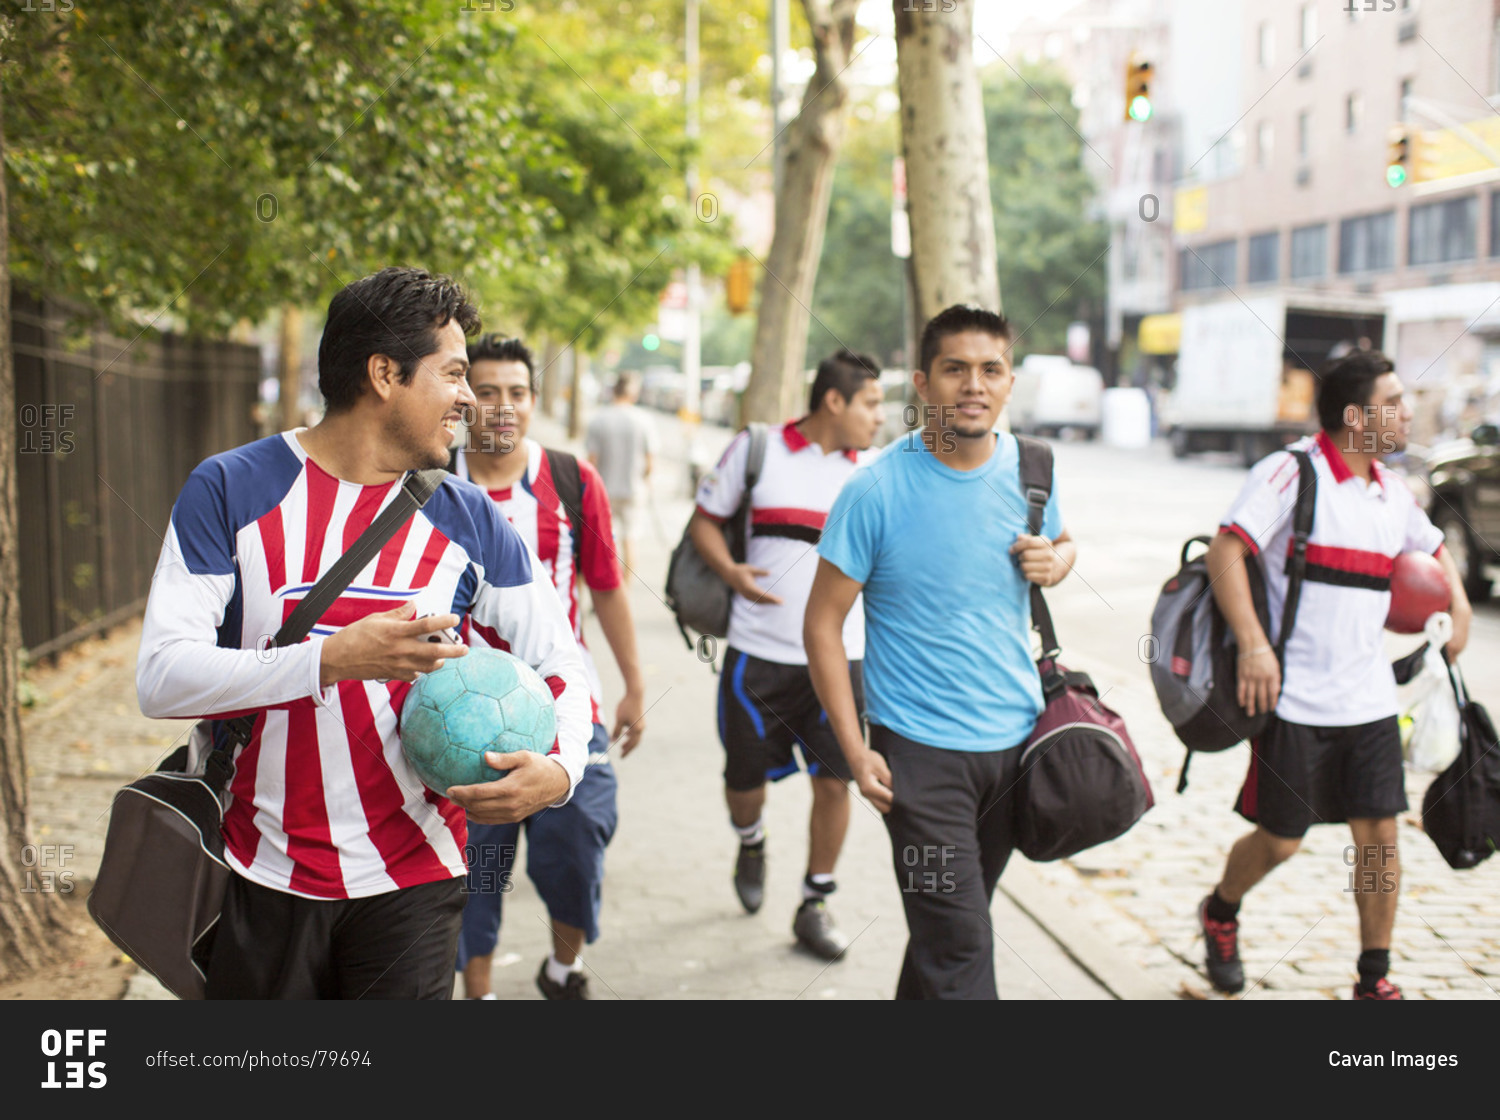 Soccer team walking on street